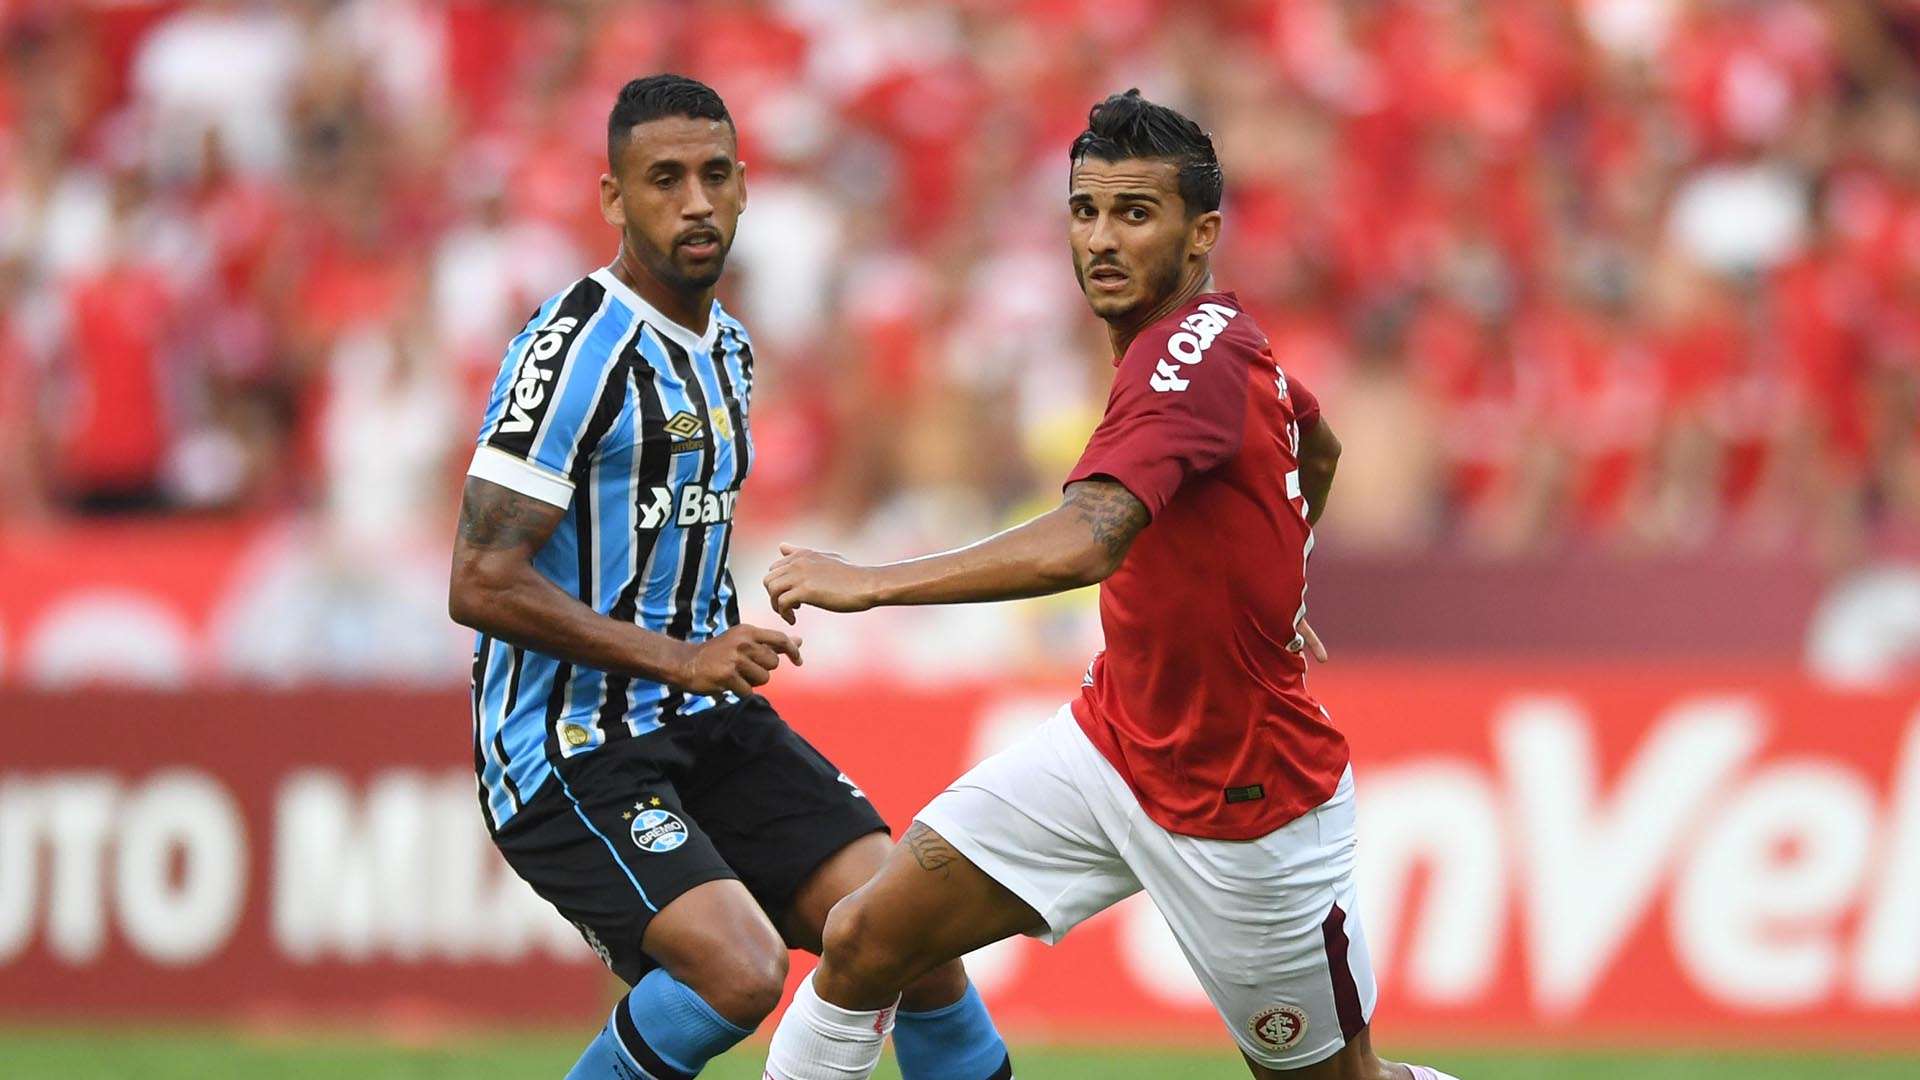 Guilherme Parede Michel Internacional Grêmio 14042019